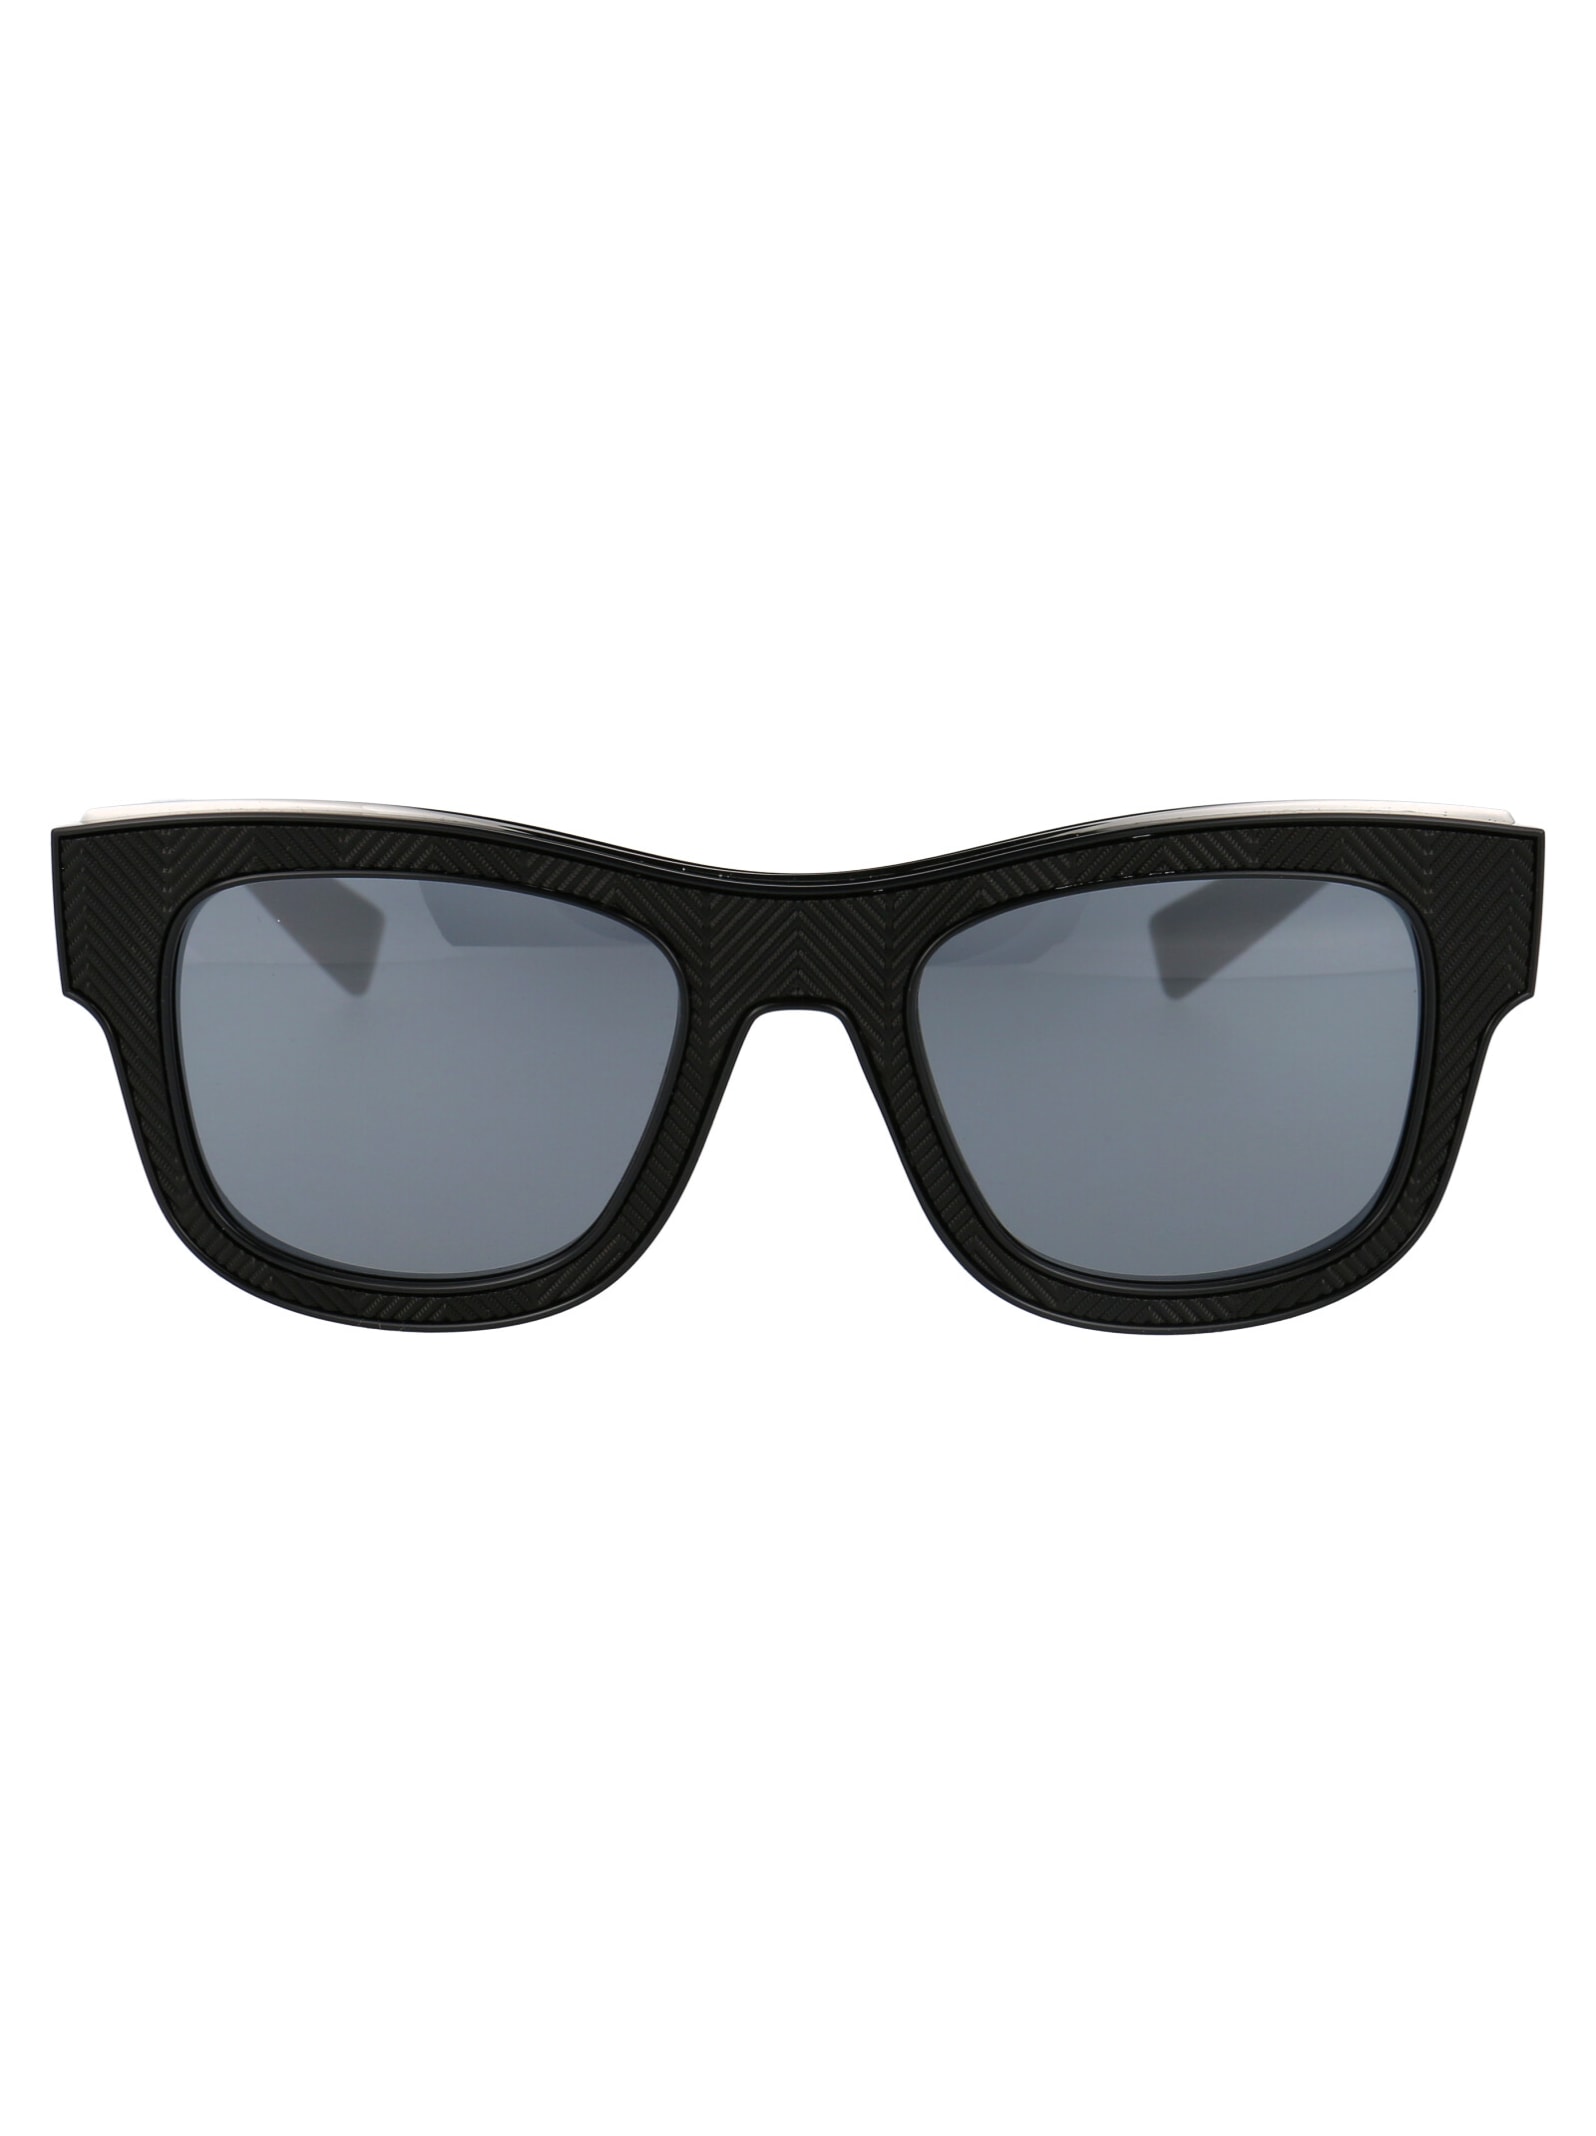 Dolce & Gabbana Eyewear 0dg6140 Sunglasses